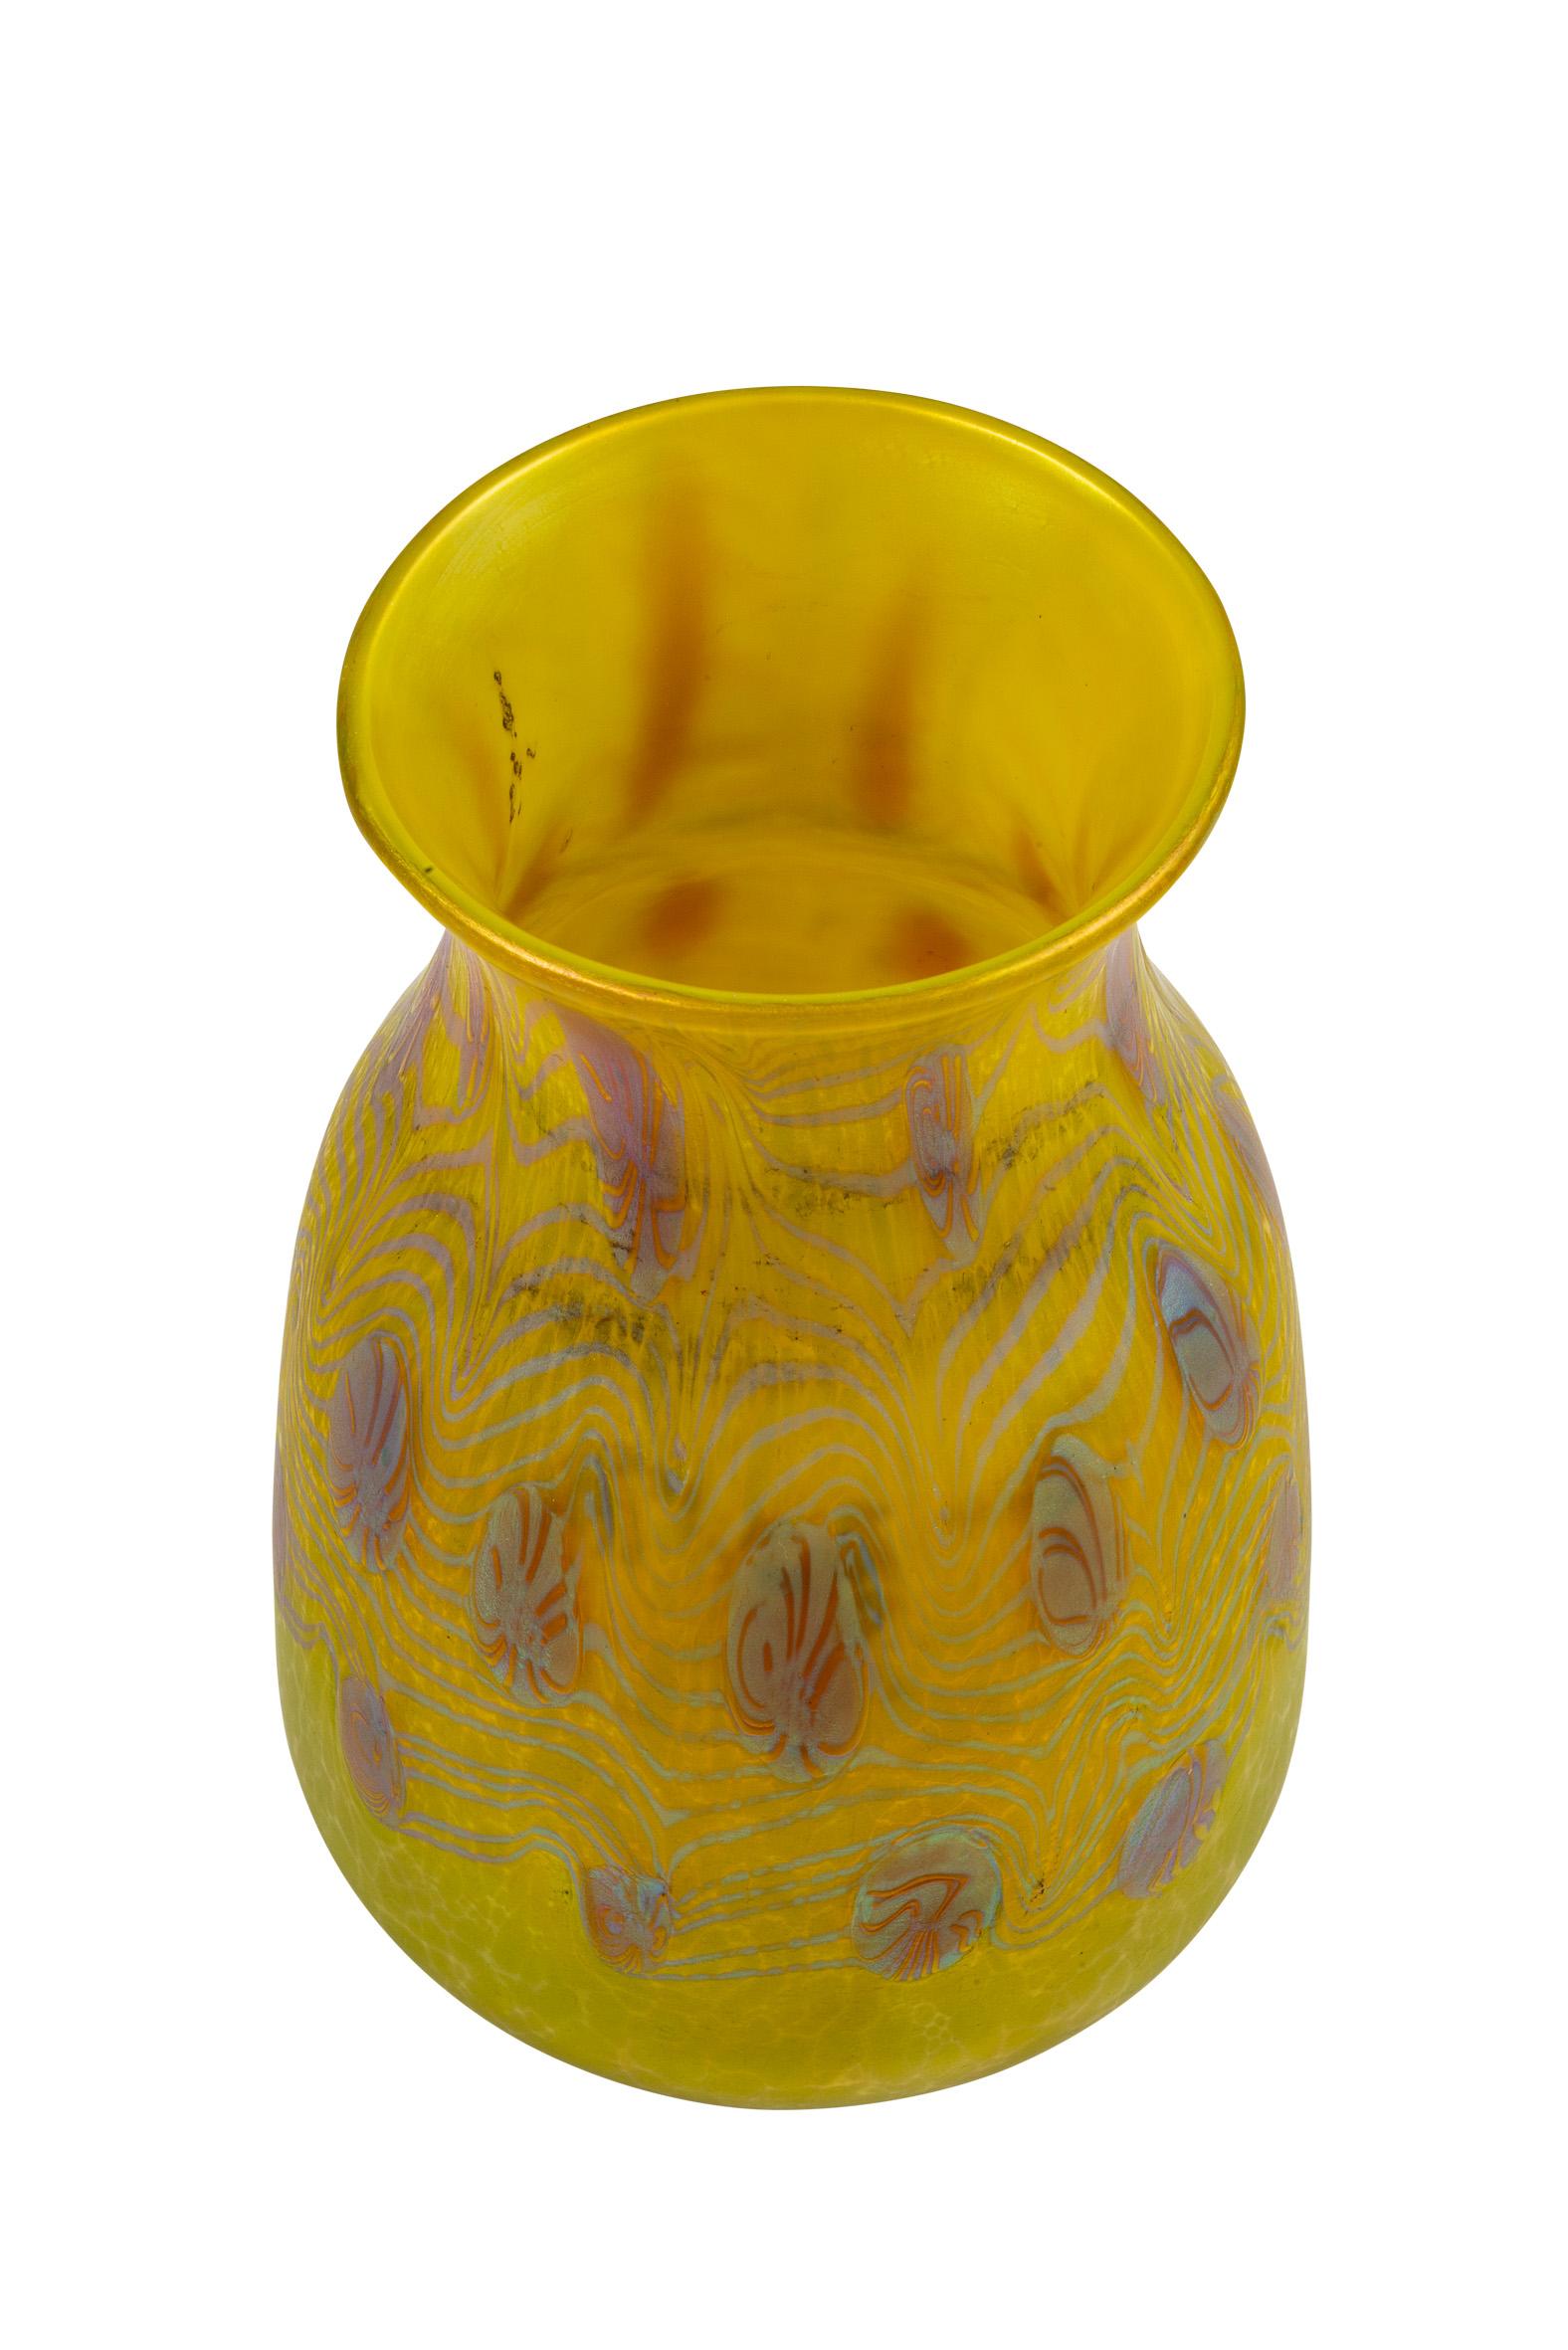 Blown Glass Austrian Jugendstil Glass Vase Yellow Iridescent circa 1903 Loetz For Sale